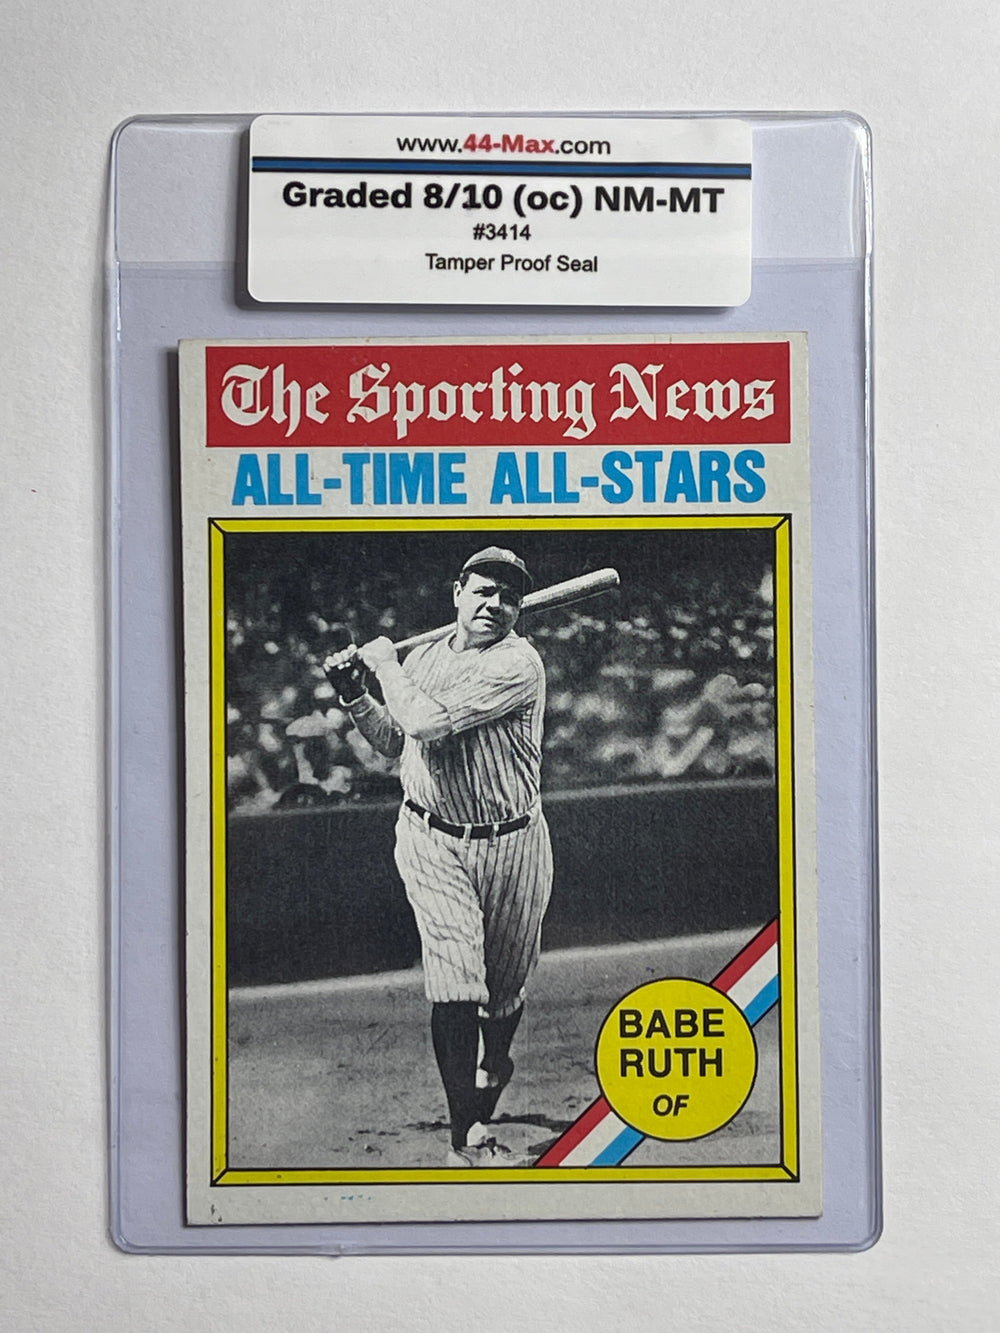 Babe Ruth 1976 Topps Baseball Card. 44-Max 8/10 (oc) NM-MT #3414